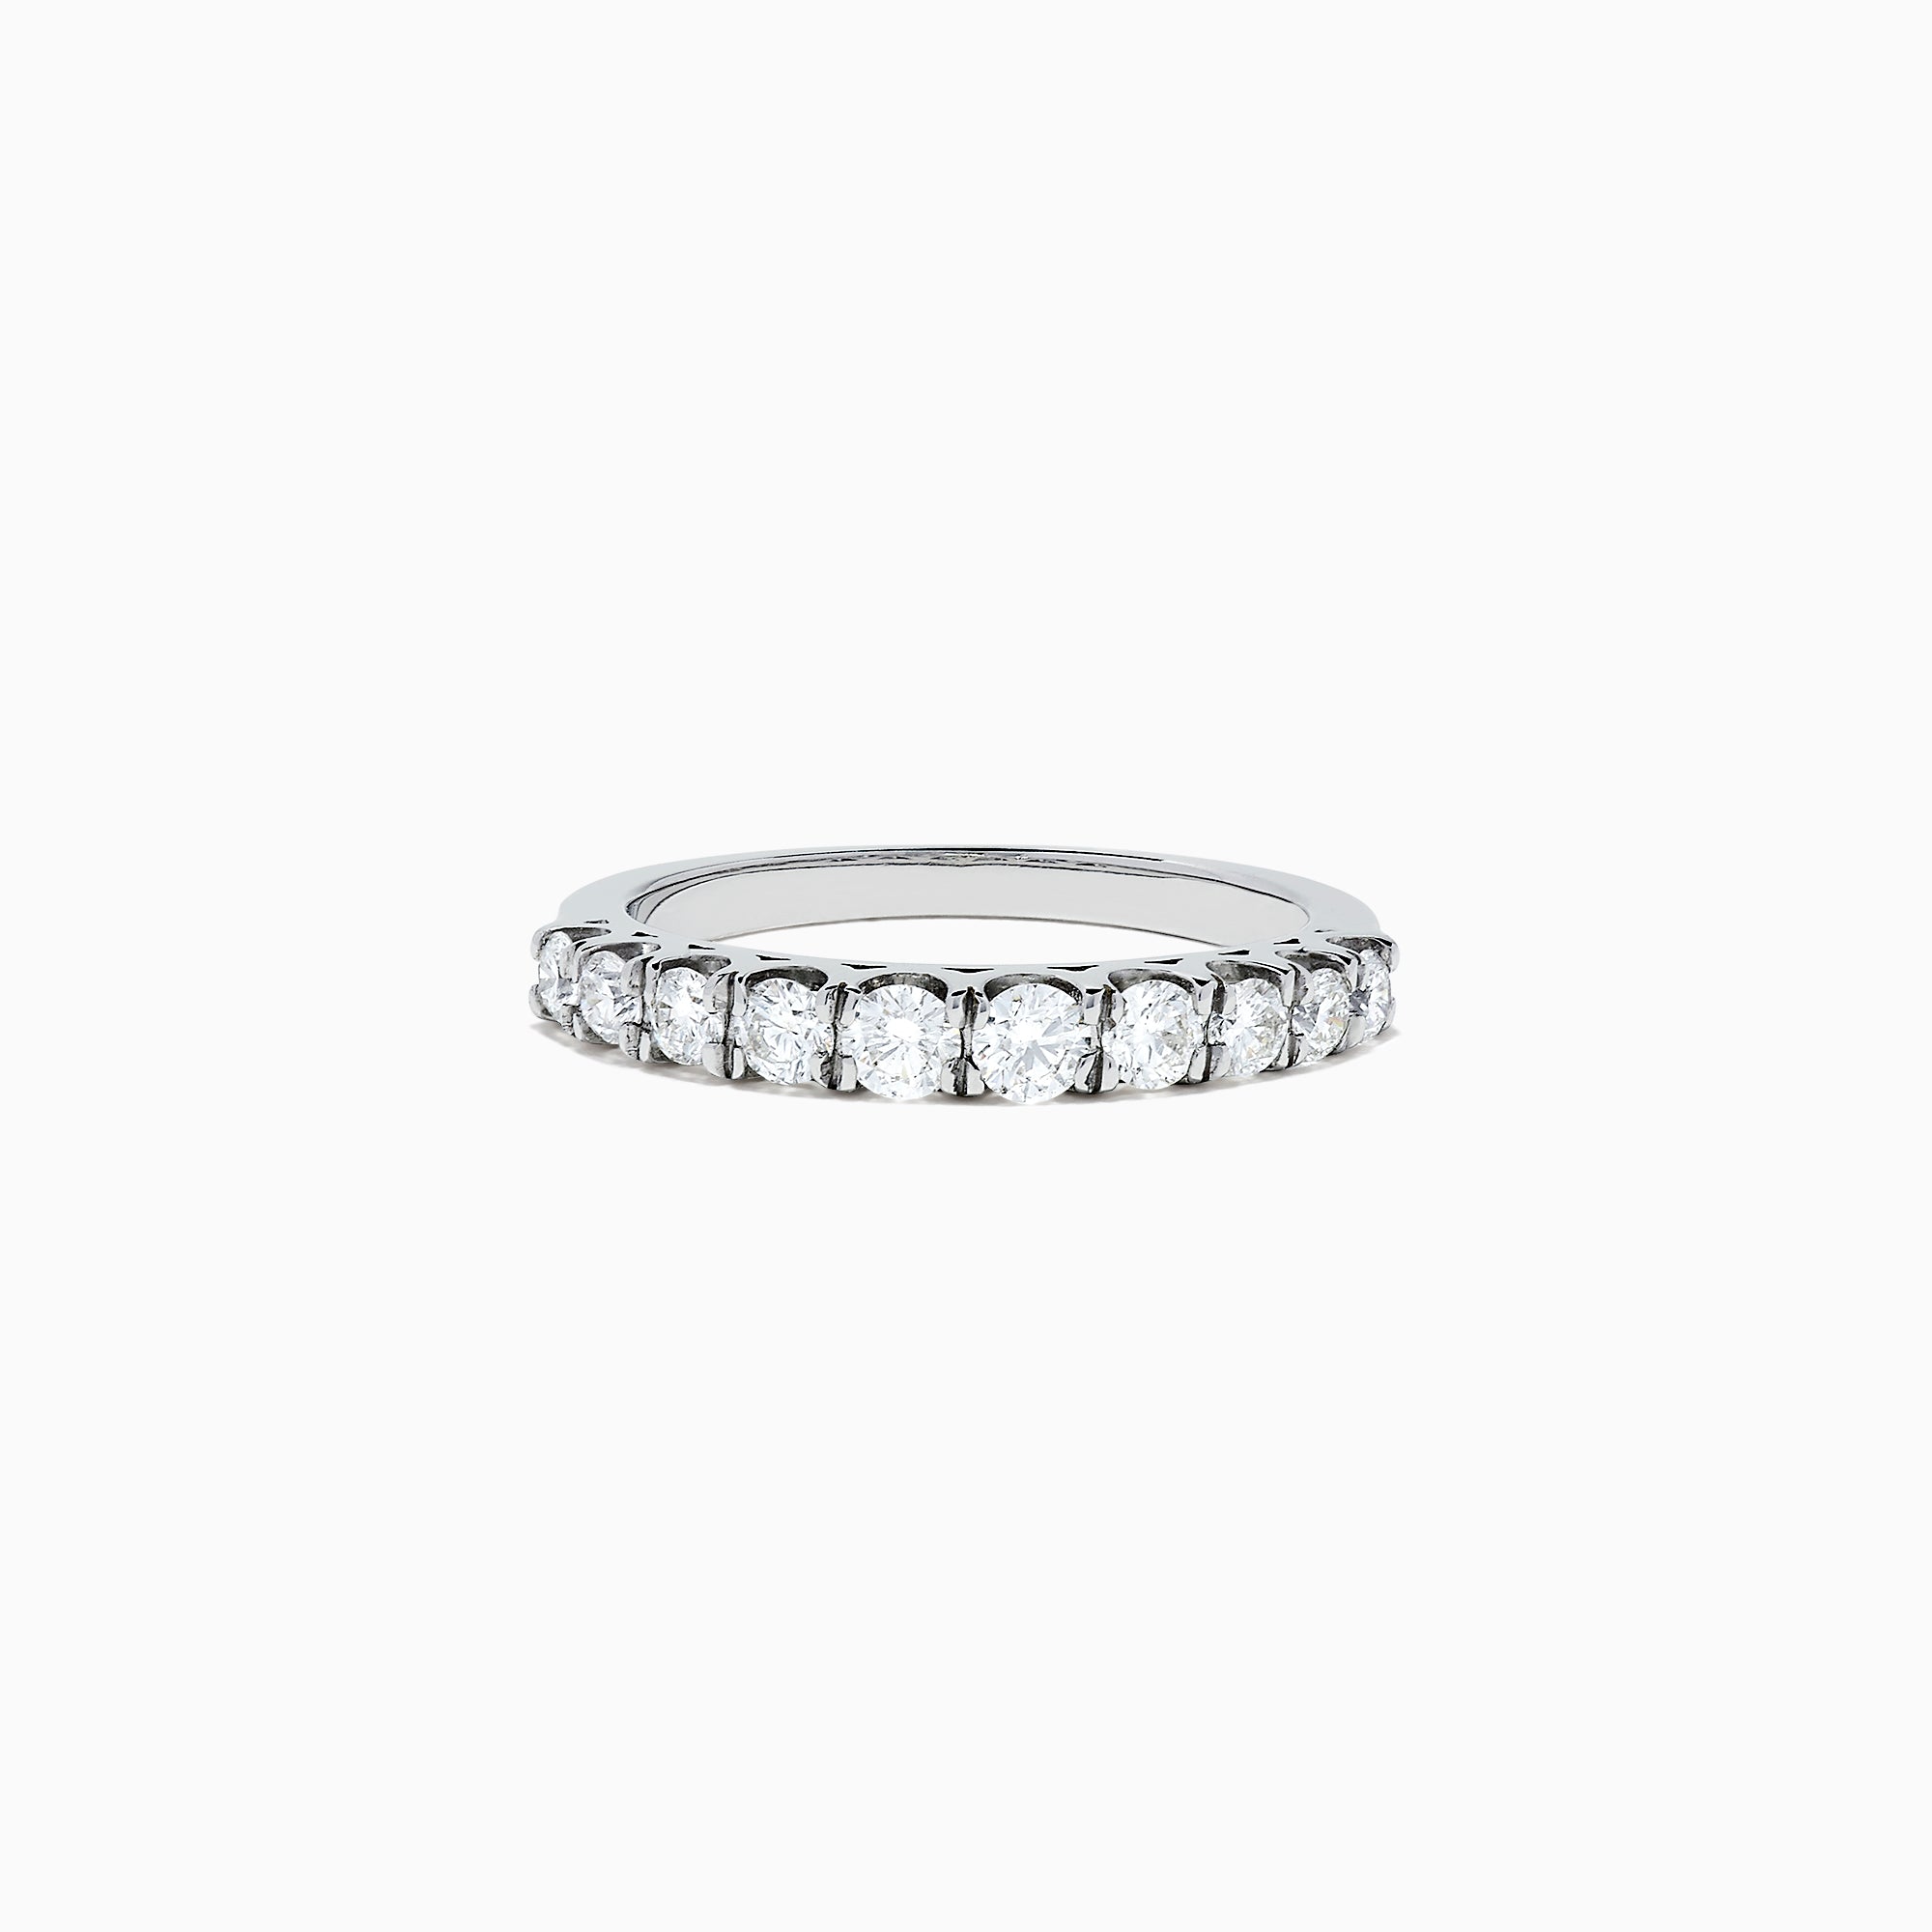 Effy Pave Classica 14K White Gold Diamond Ring, 0.67 TCW